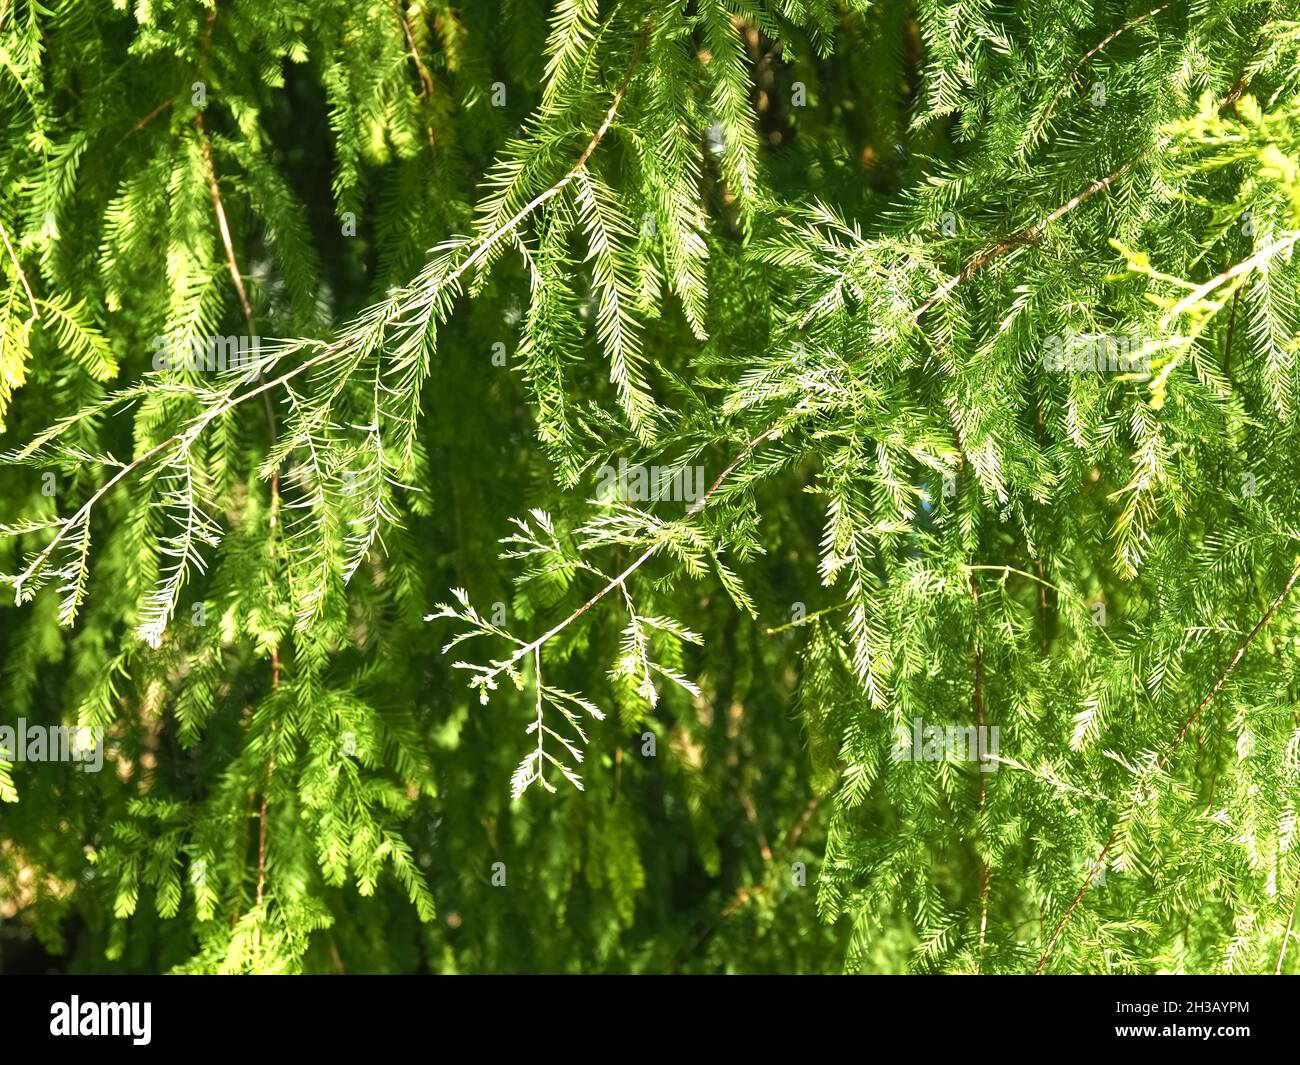 Green bald cypress tree Cupressaceae Stock Photo